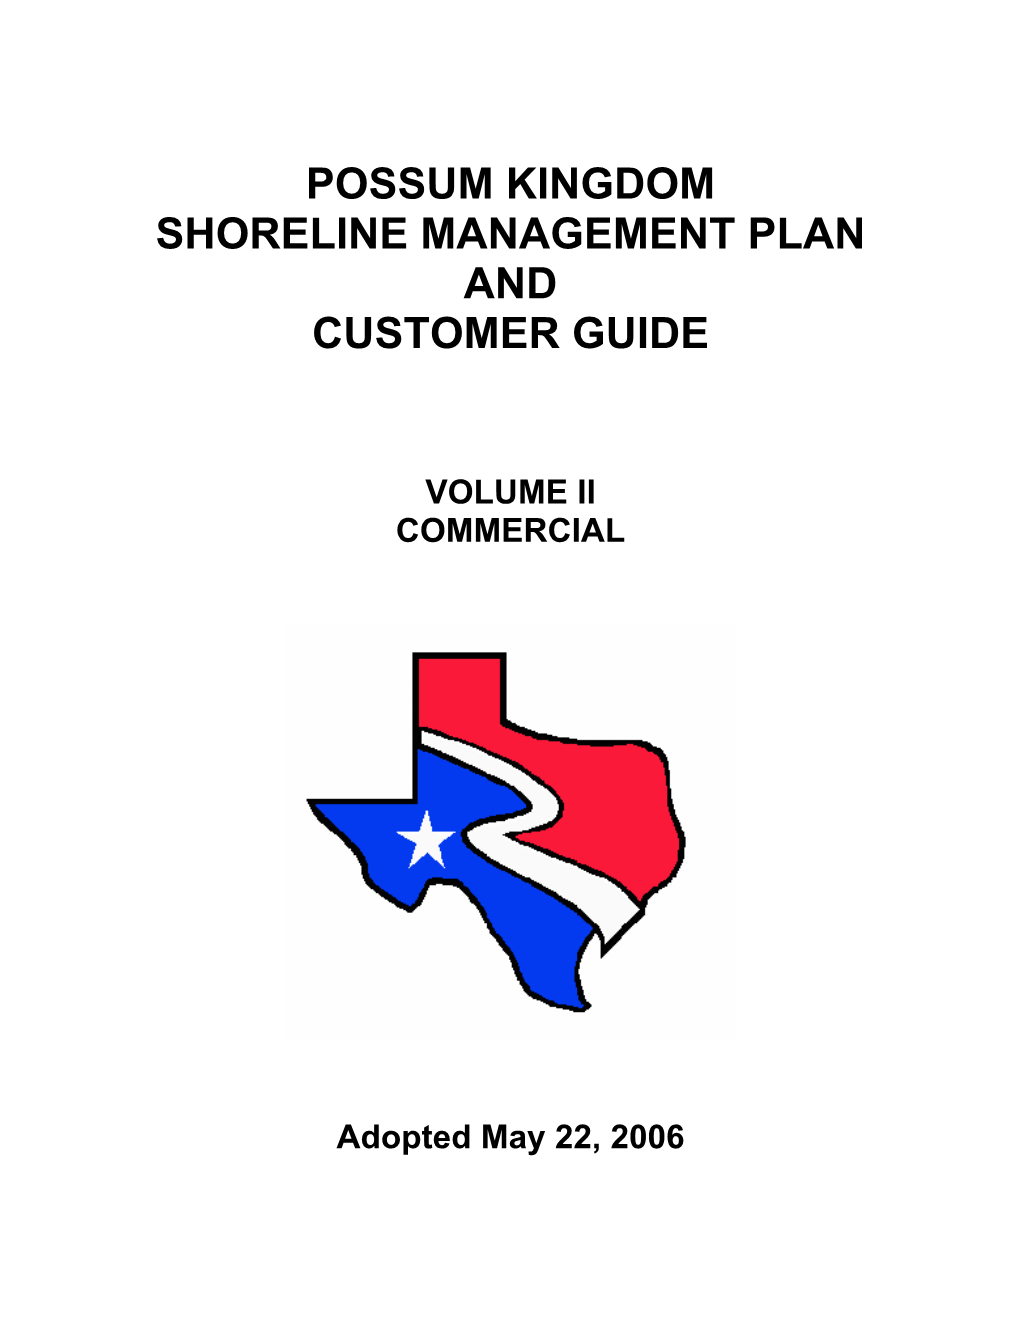 Possum Kingdom Shoreline Management Plan and Customer Guide